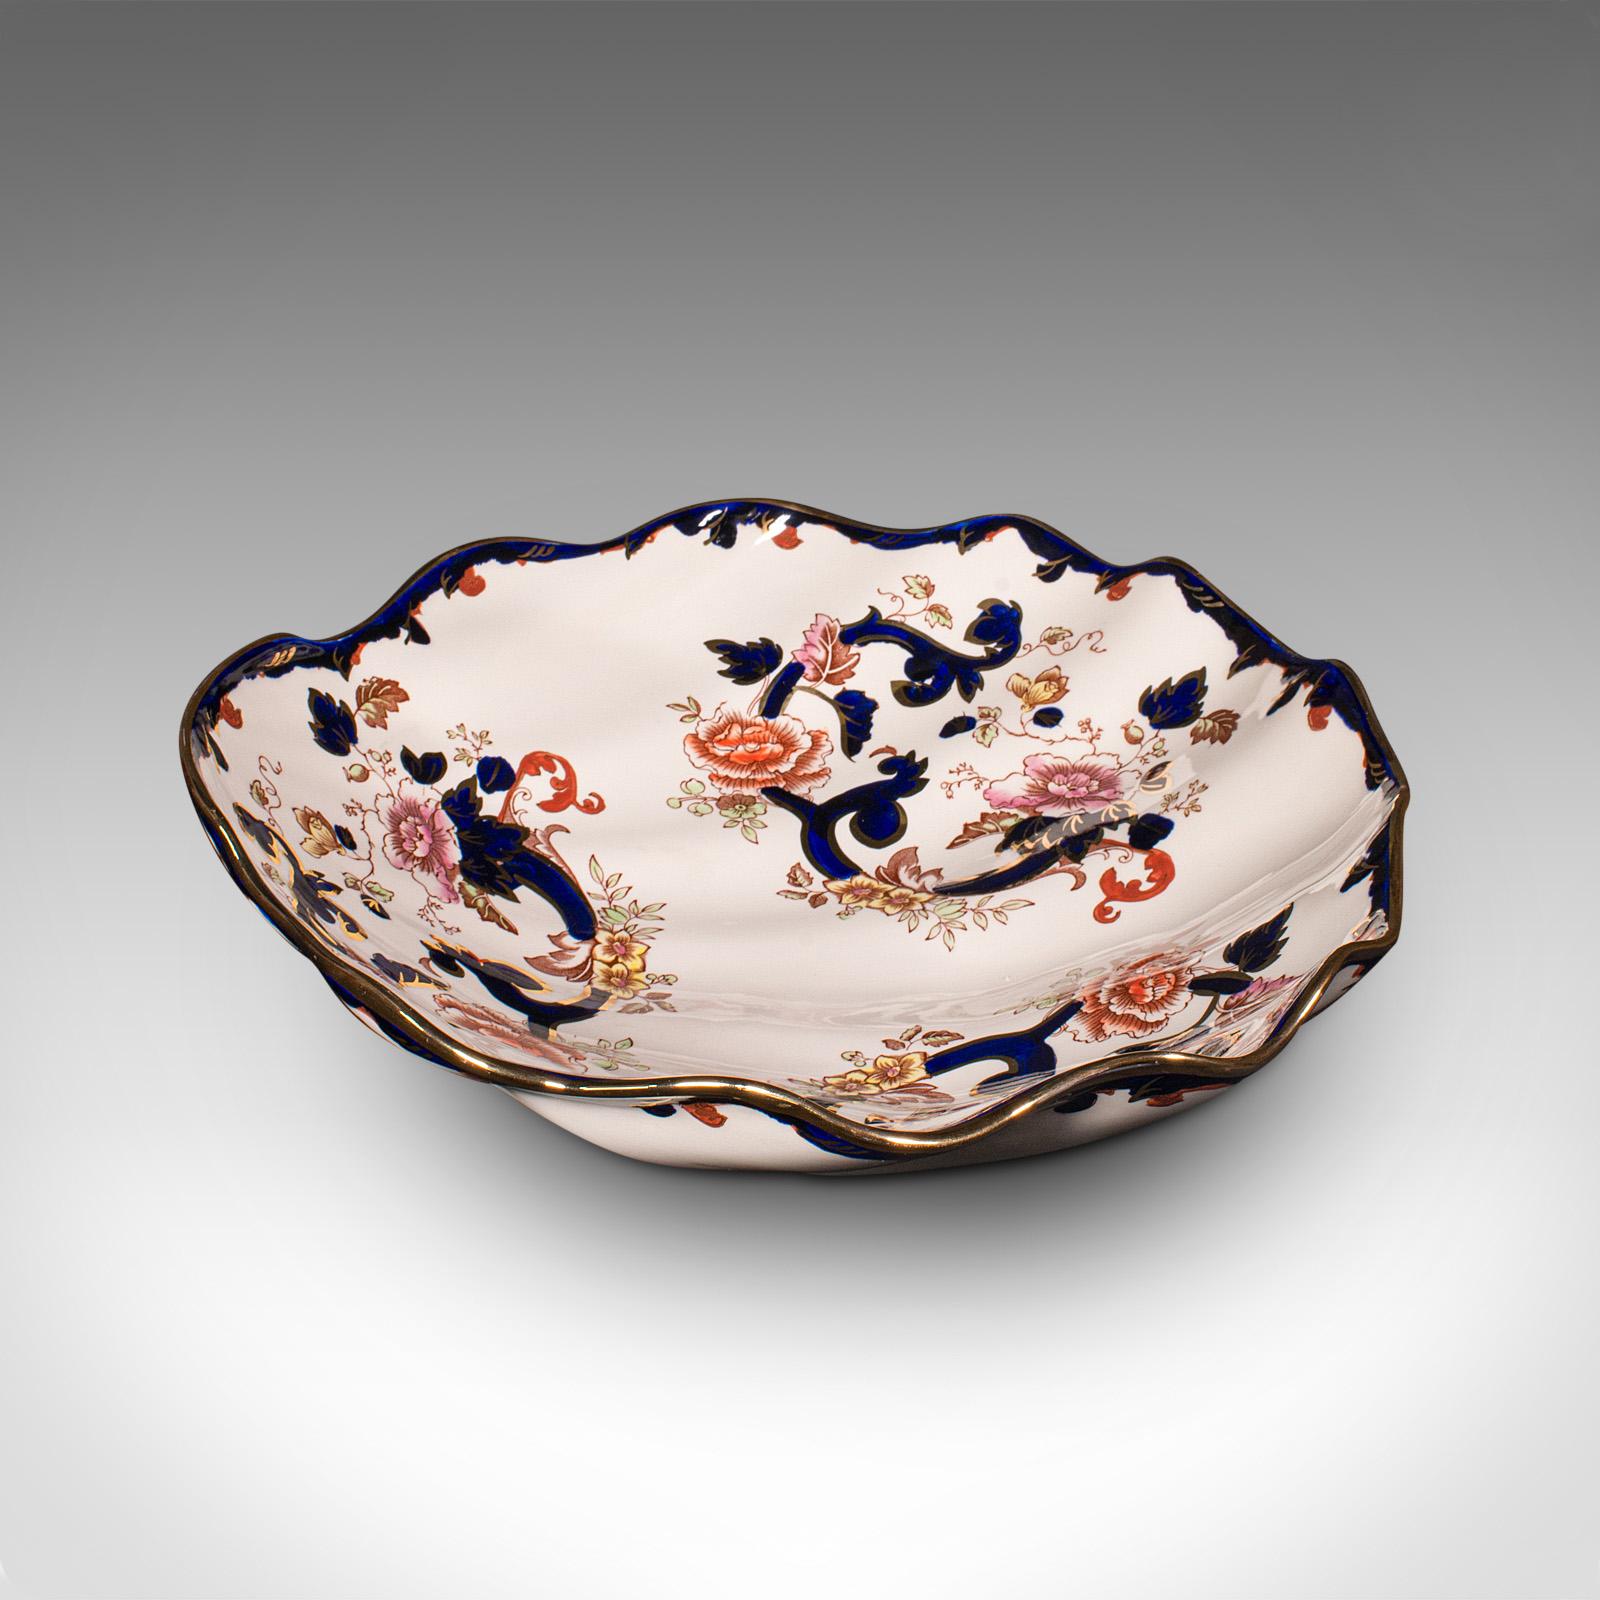 British Large Vintage Shell Shaped Fruit Bowl, English Ceramic, Decorative, Serving Dish For Sale